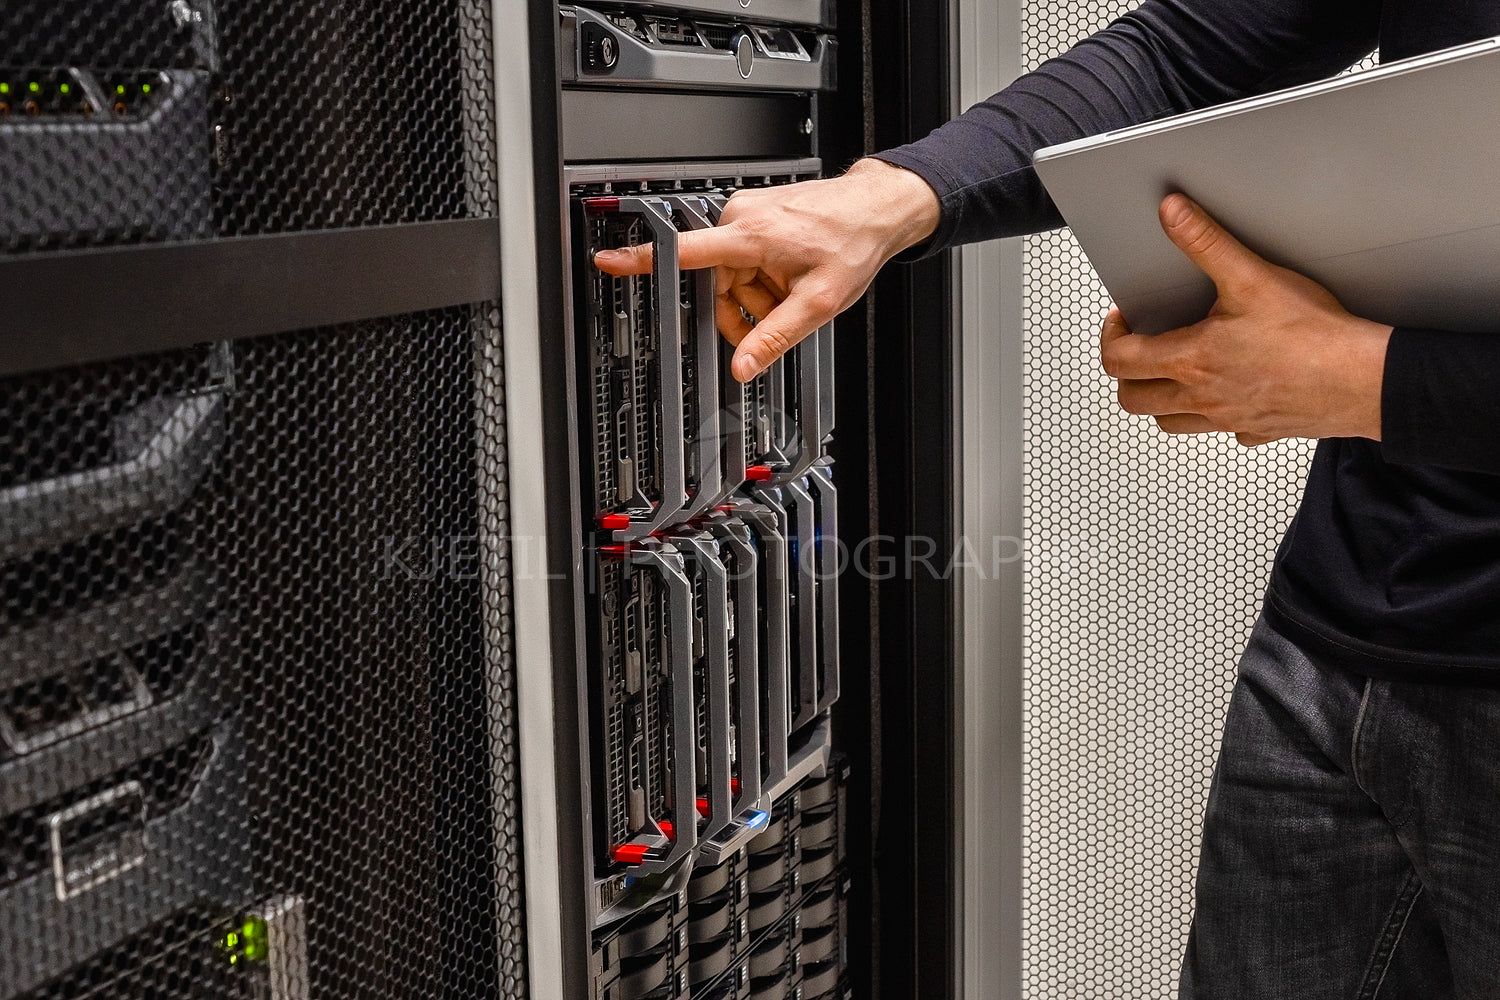 IT Professional Holding Digital Tablet Checking Blade Servers in Datacenter